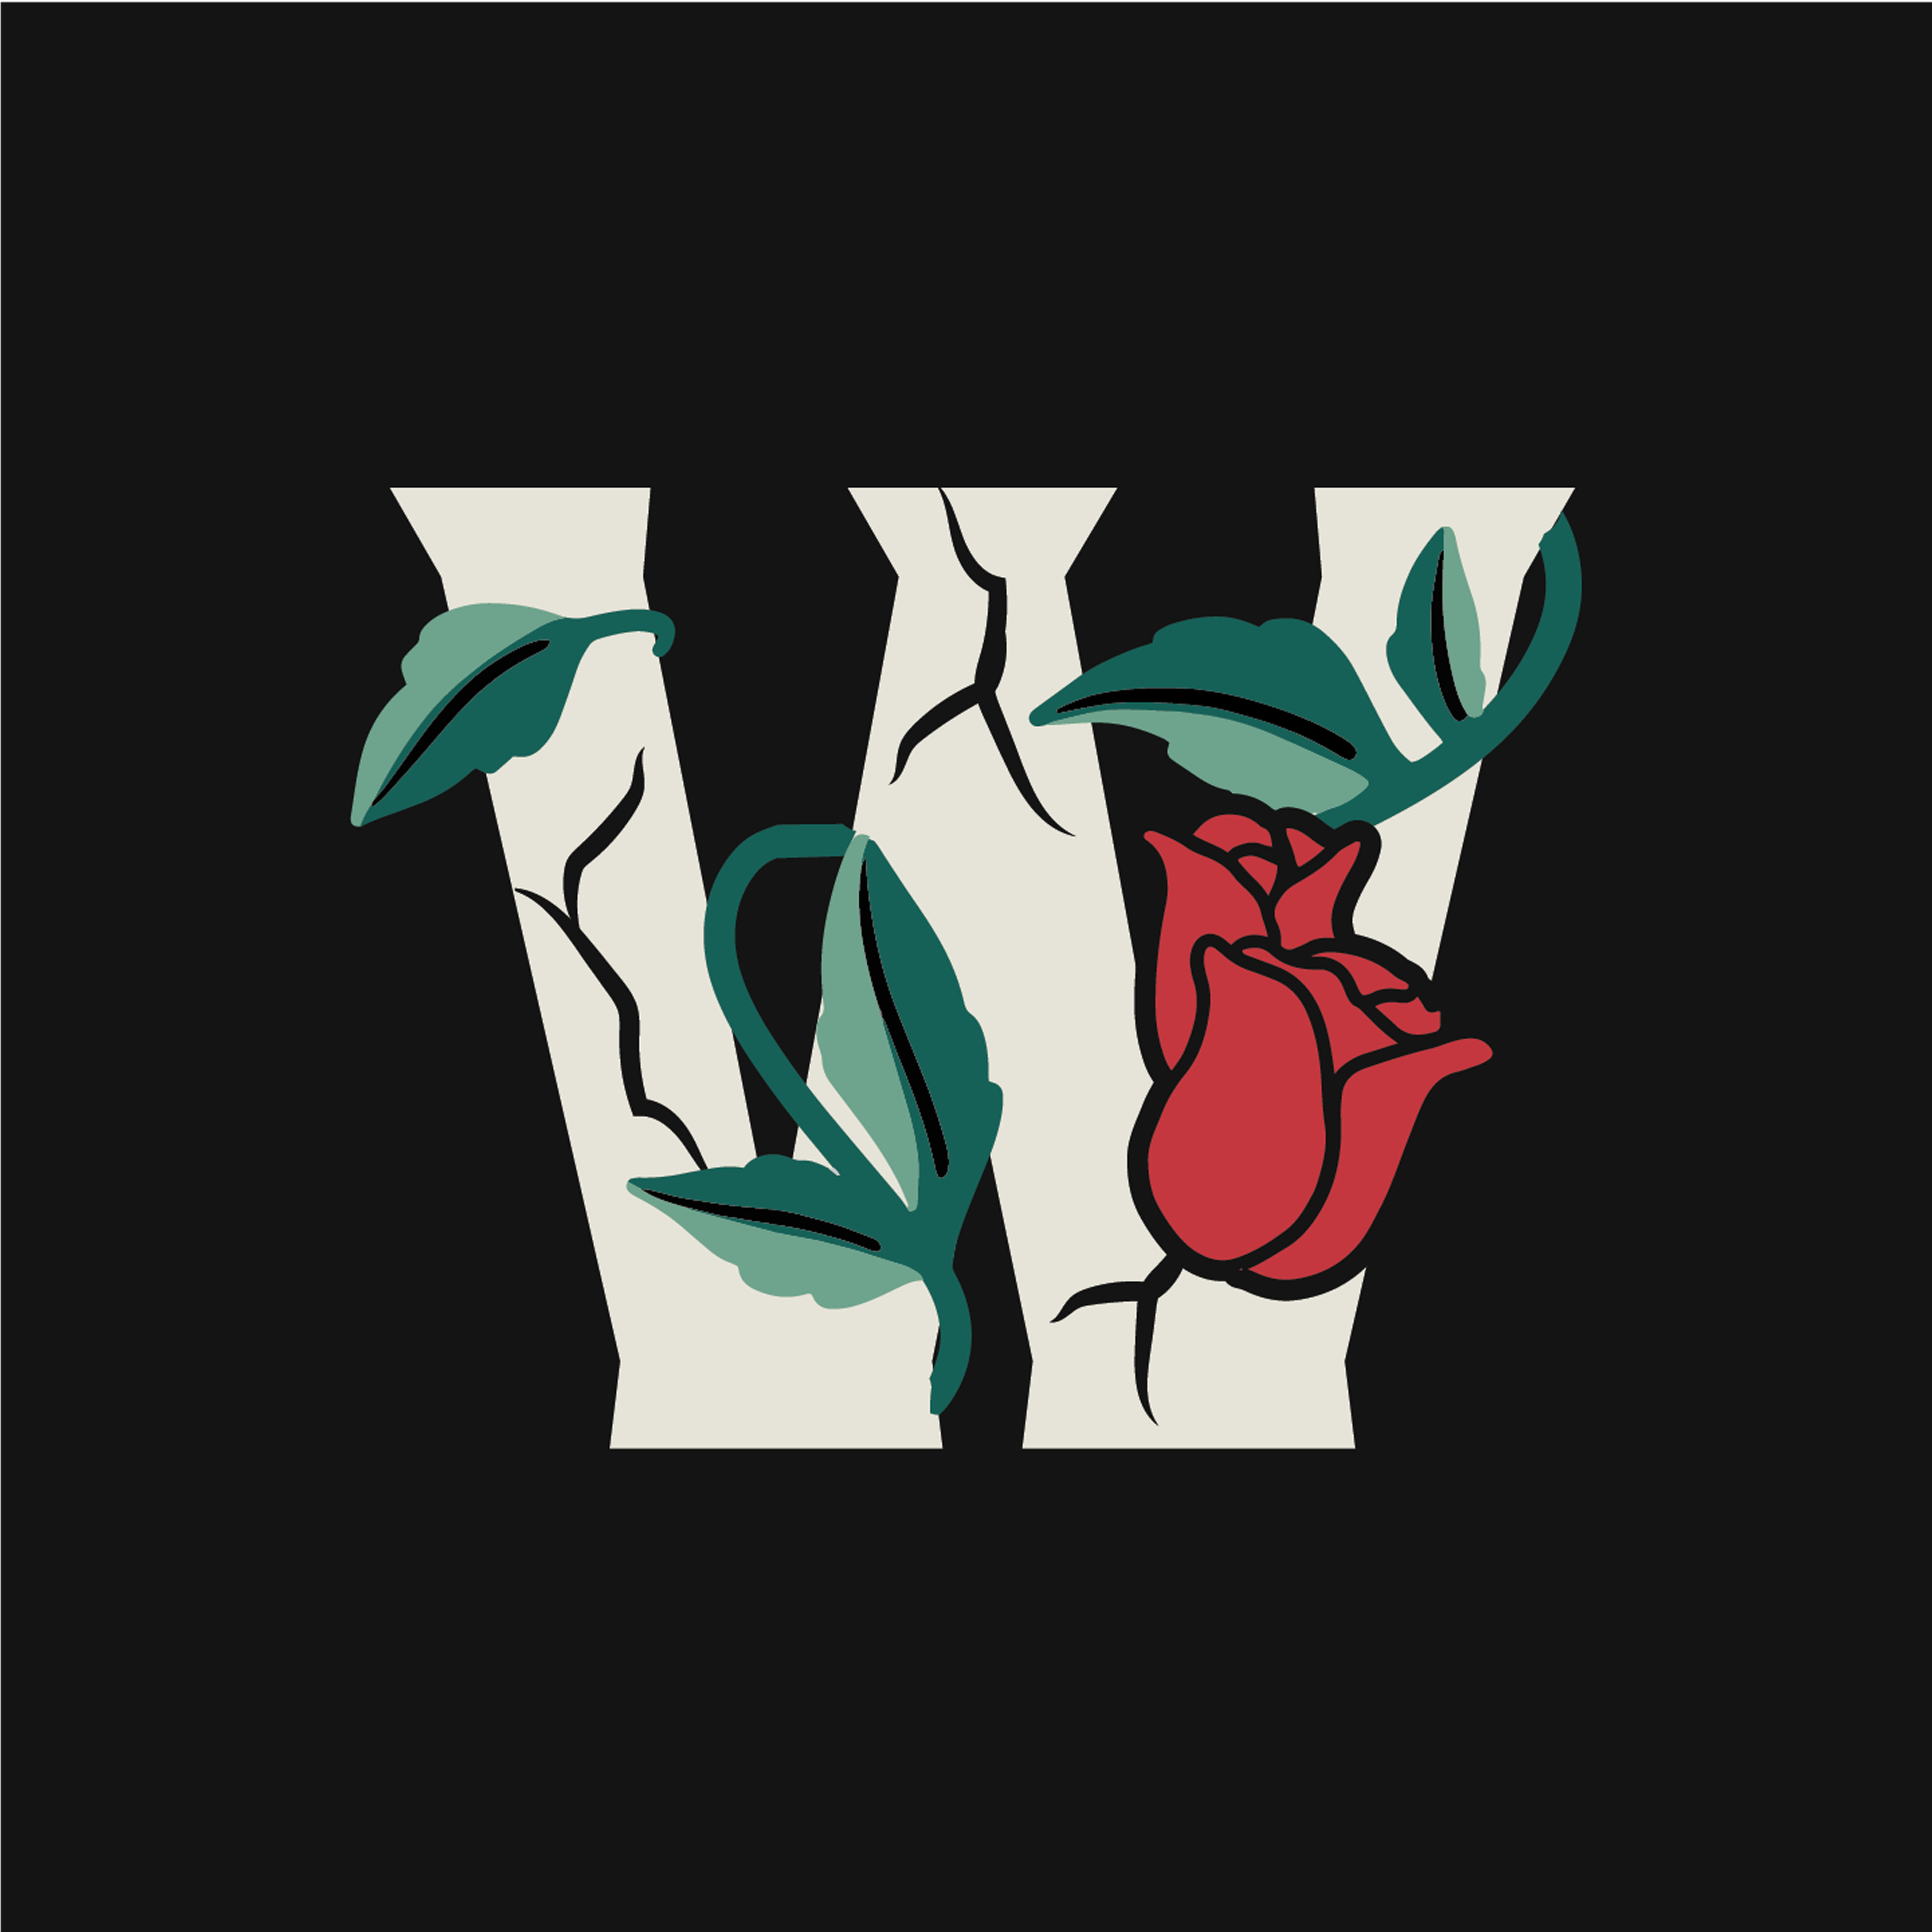 rose-letter-w-design-theme